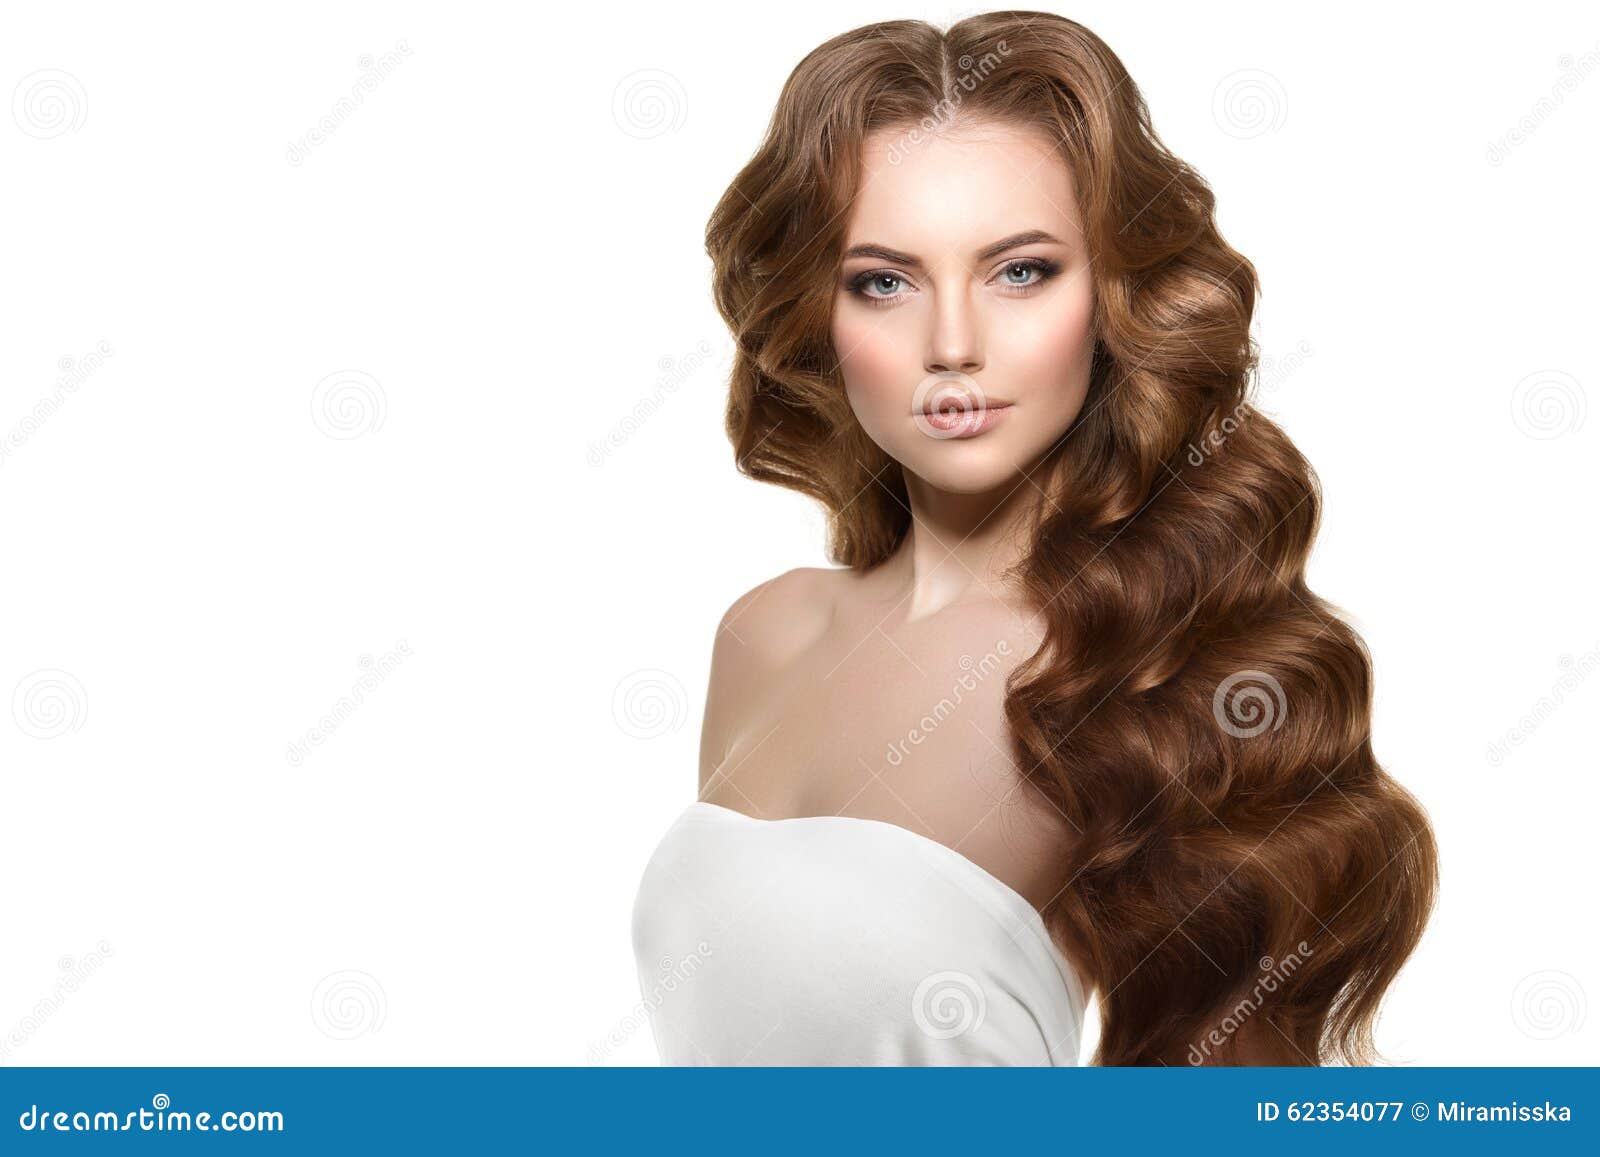 Long Hair Waves Curls Updo Hairstyle Salon Fashion Model Woman Stock Photo  by ©miramiska 225768220